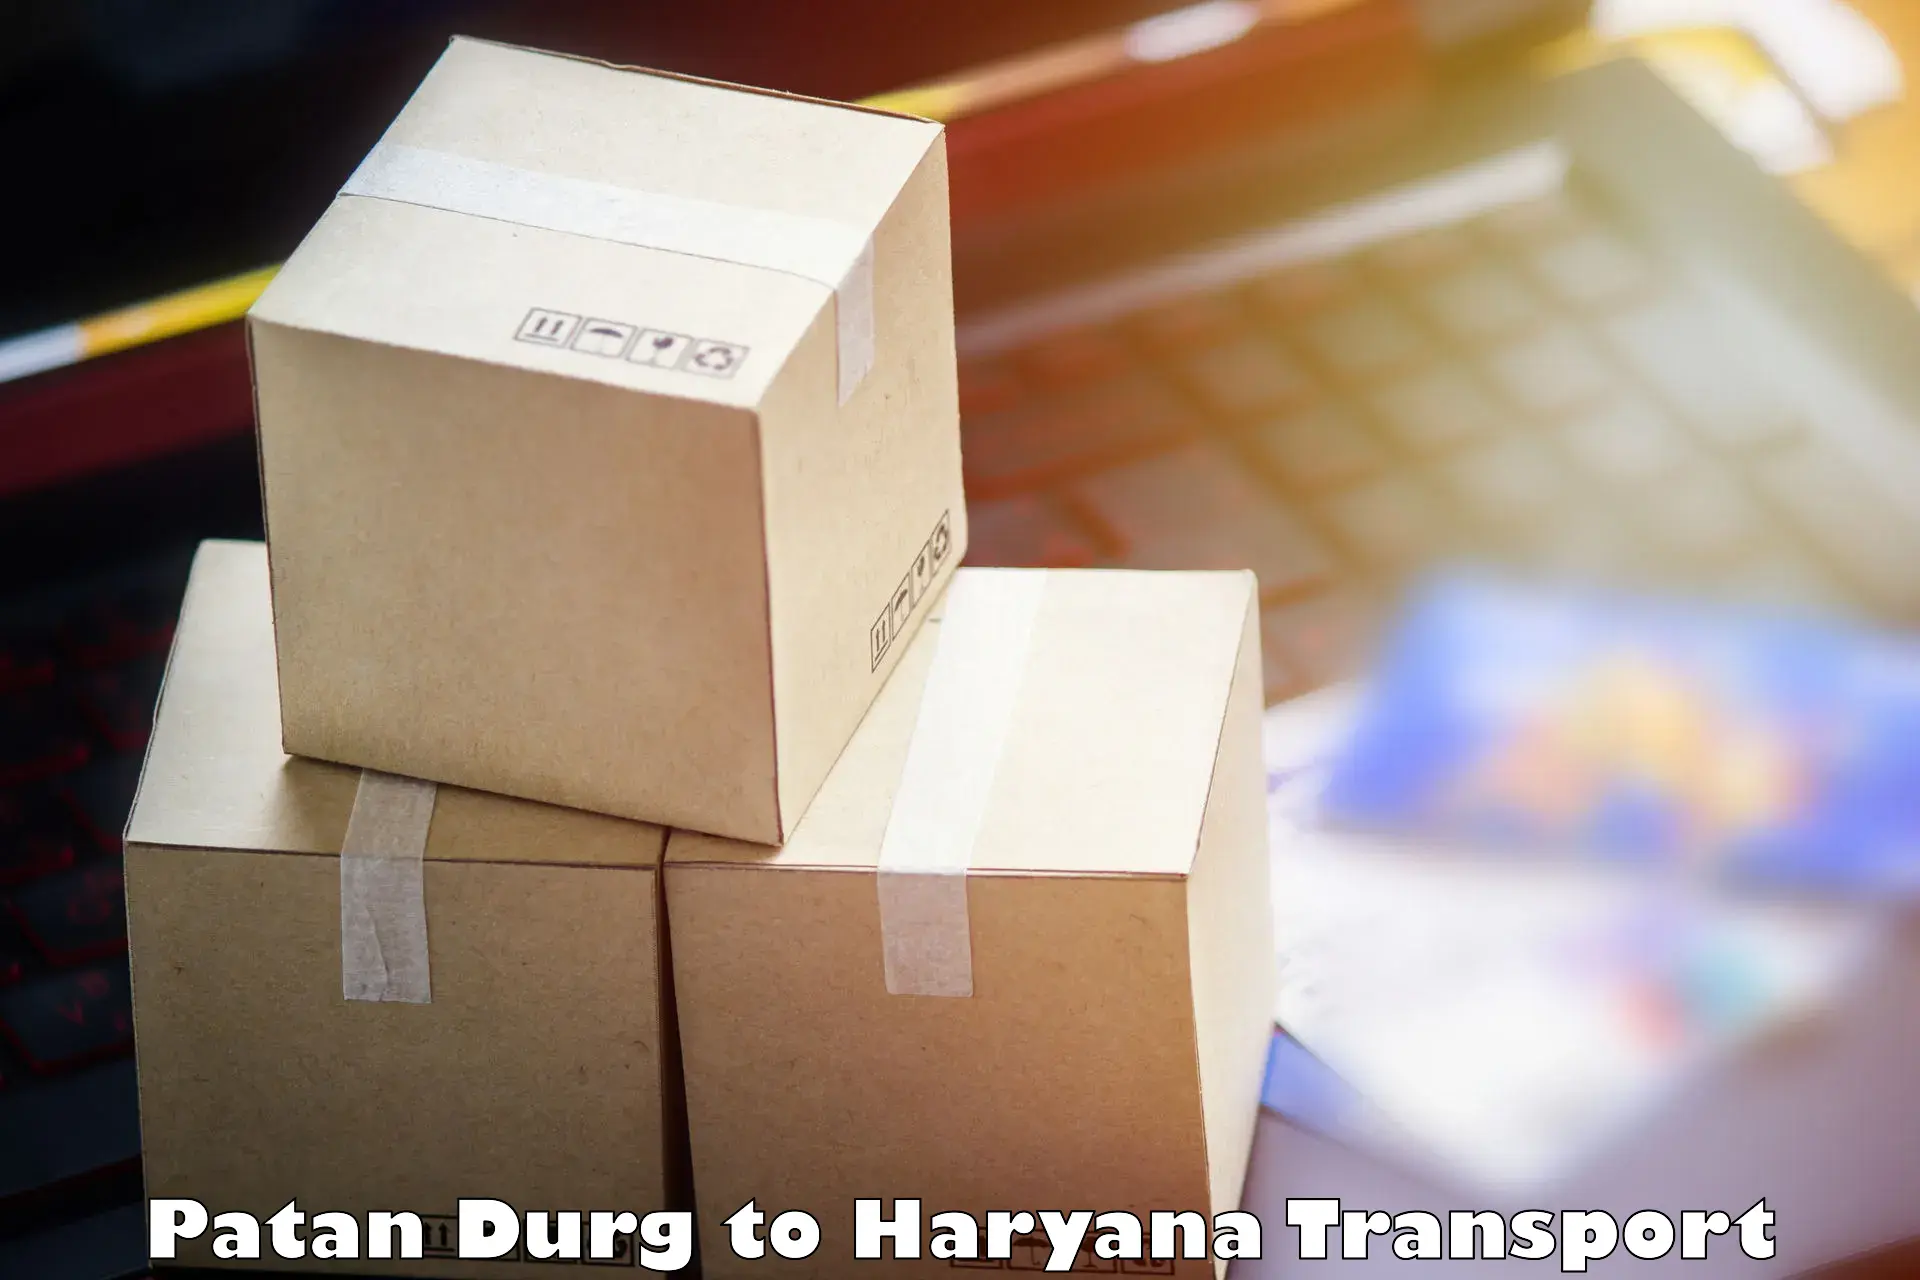 Online transport service Patan Durg to Panipat